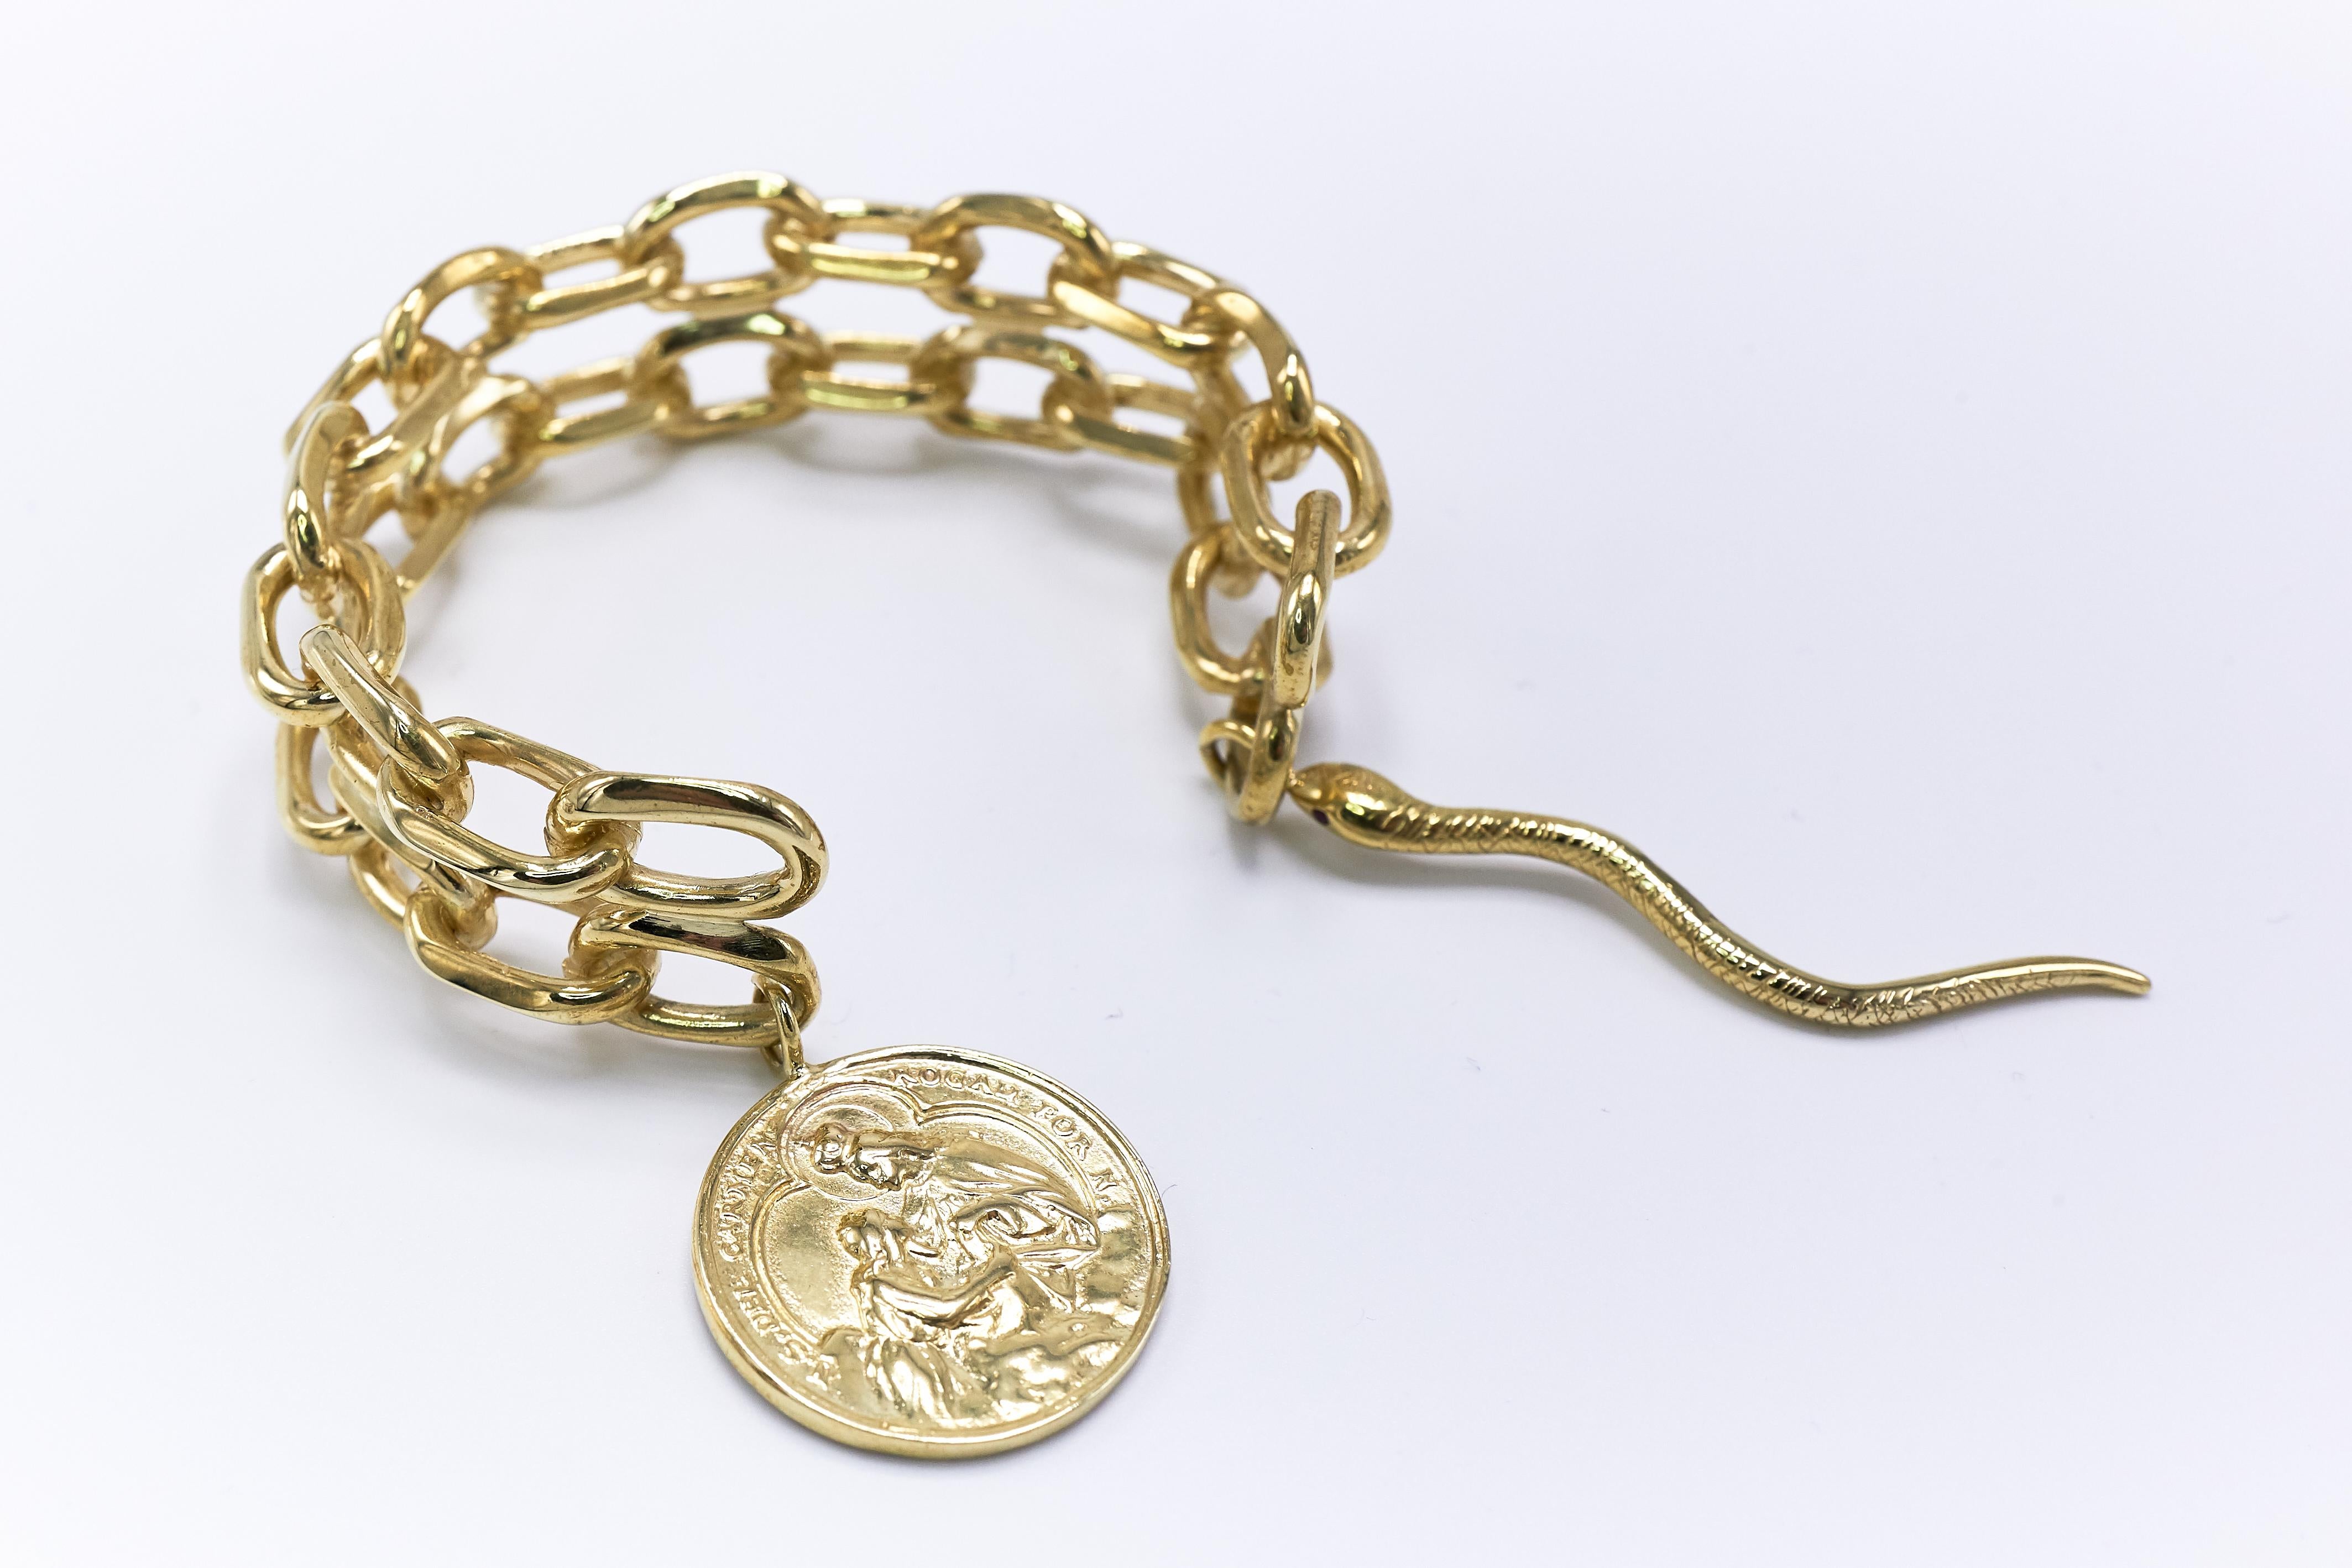 Ruby Statement Arm Cuff Chain Bracelet Virgin Mary Medal Snake J Dauphin

J DAUPHIN Manchette 